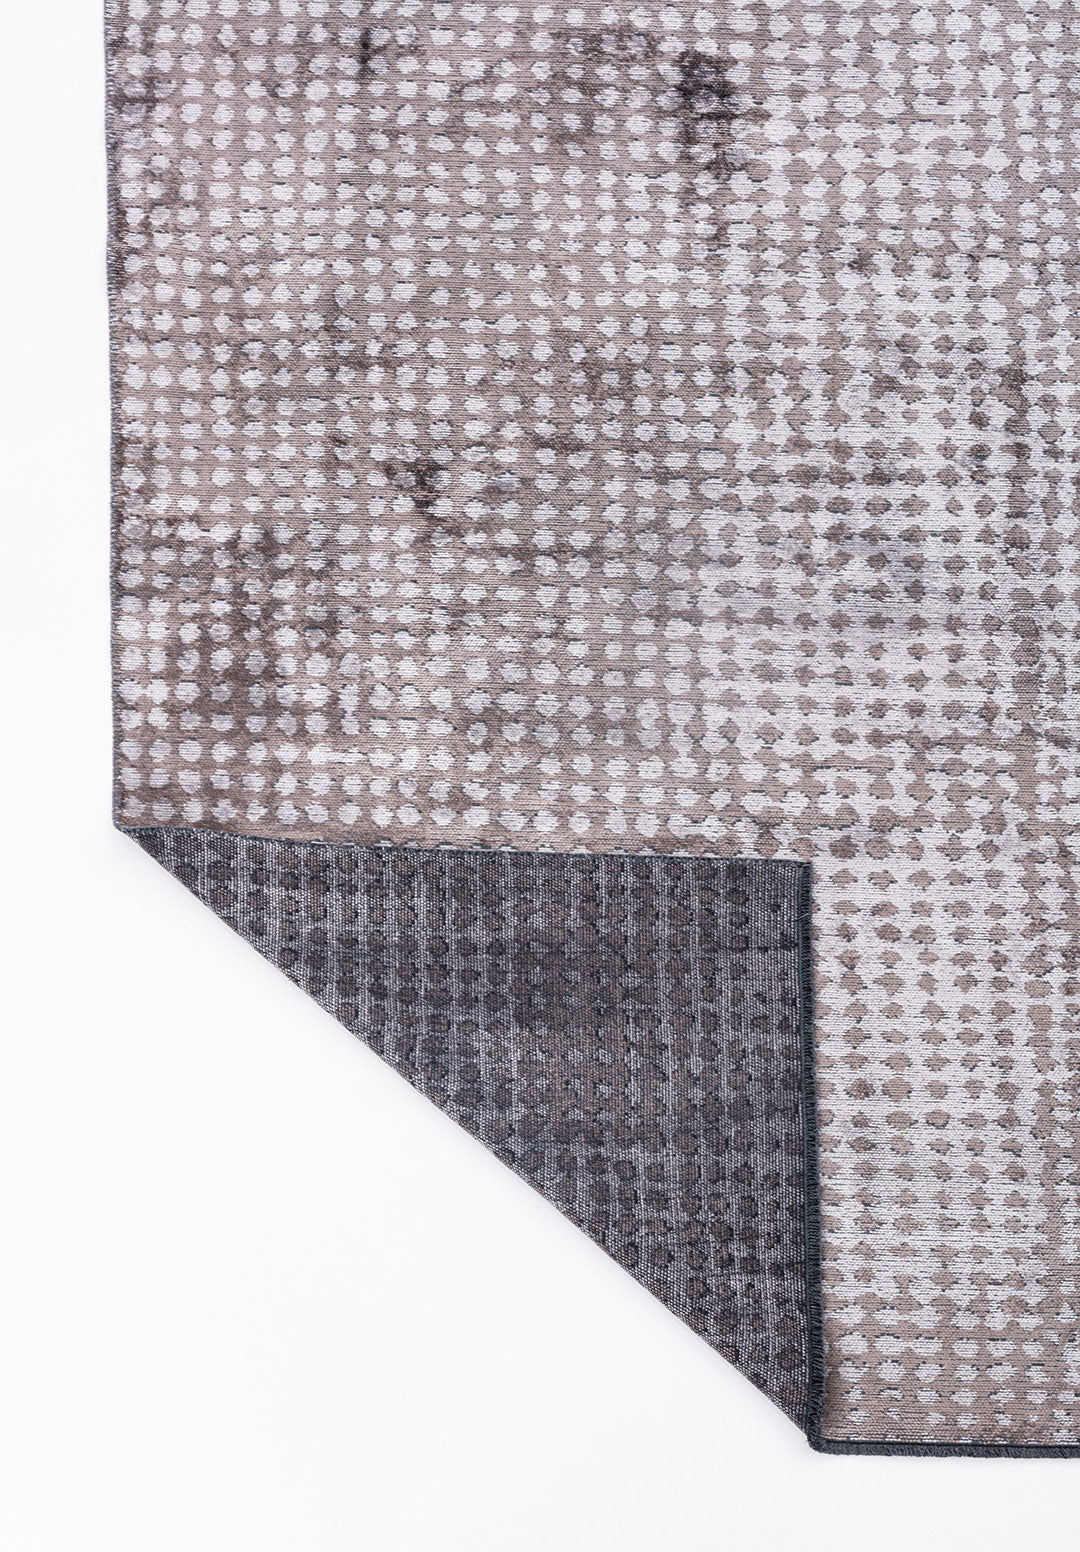 Dots Dark Grey - Light Grey Rug Rugs - Venetto Design Venettodesign.com